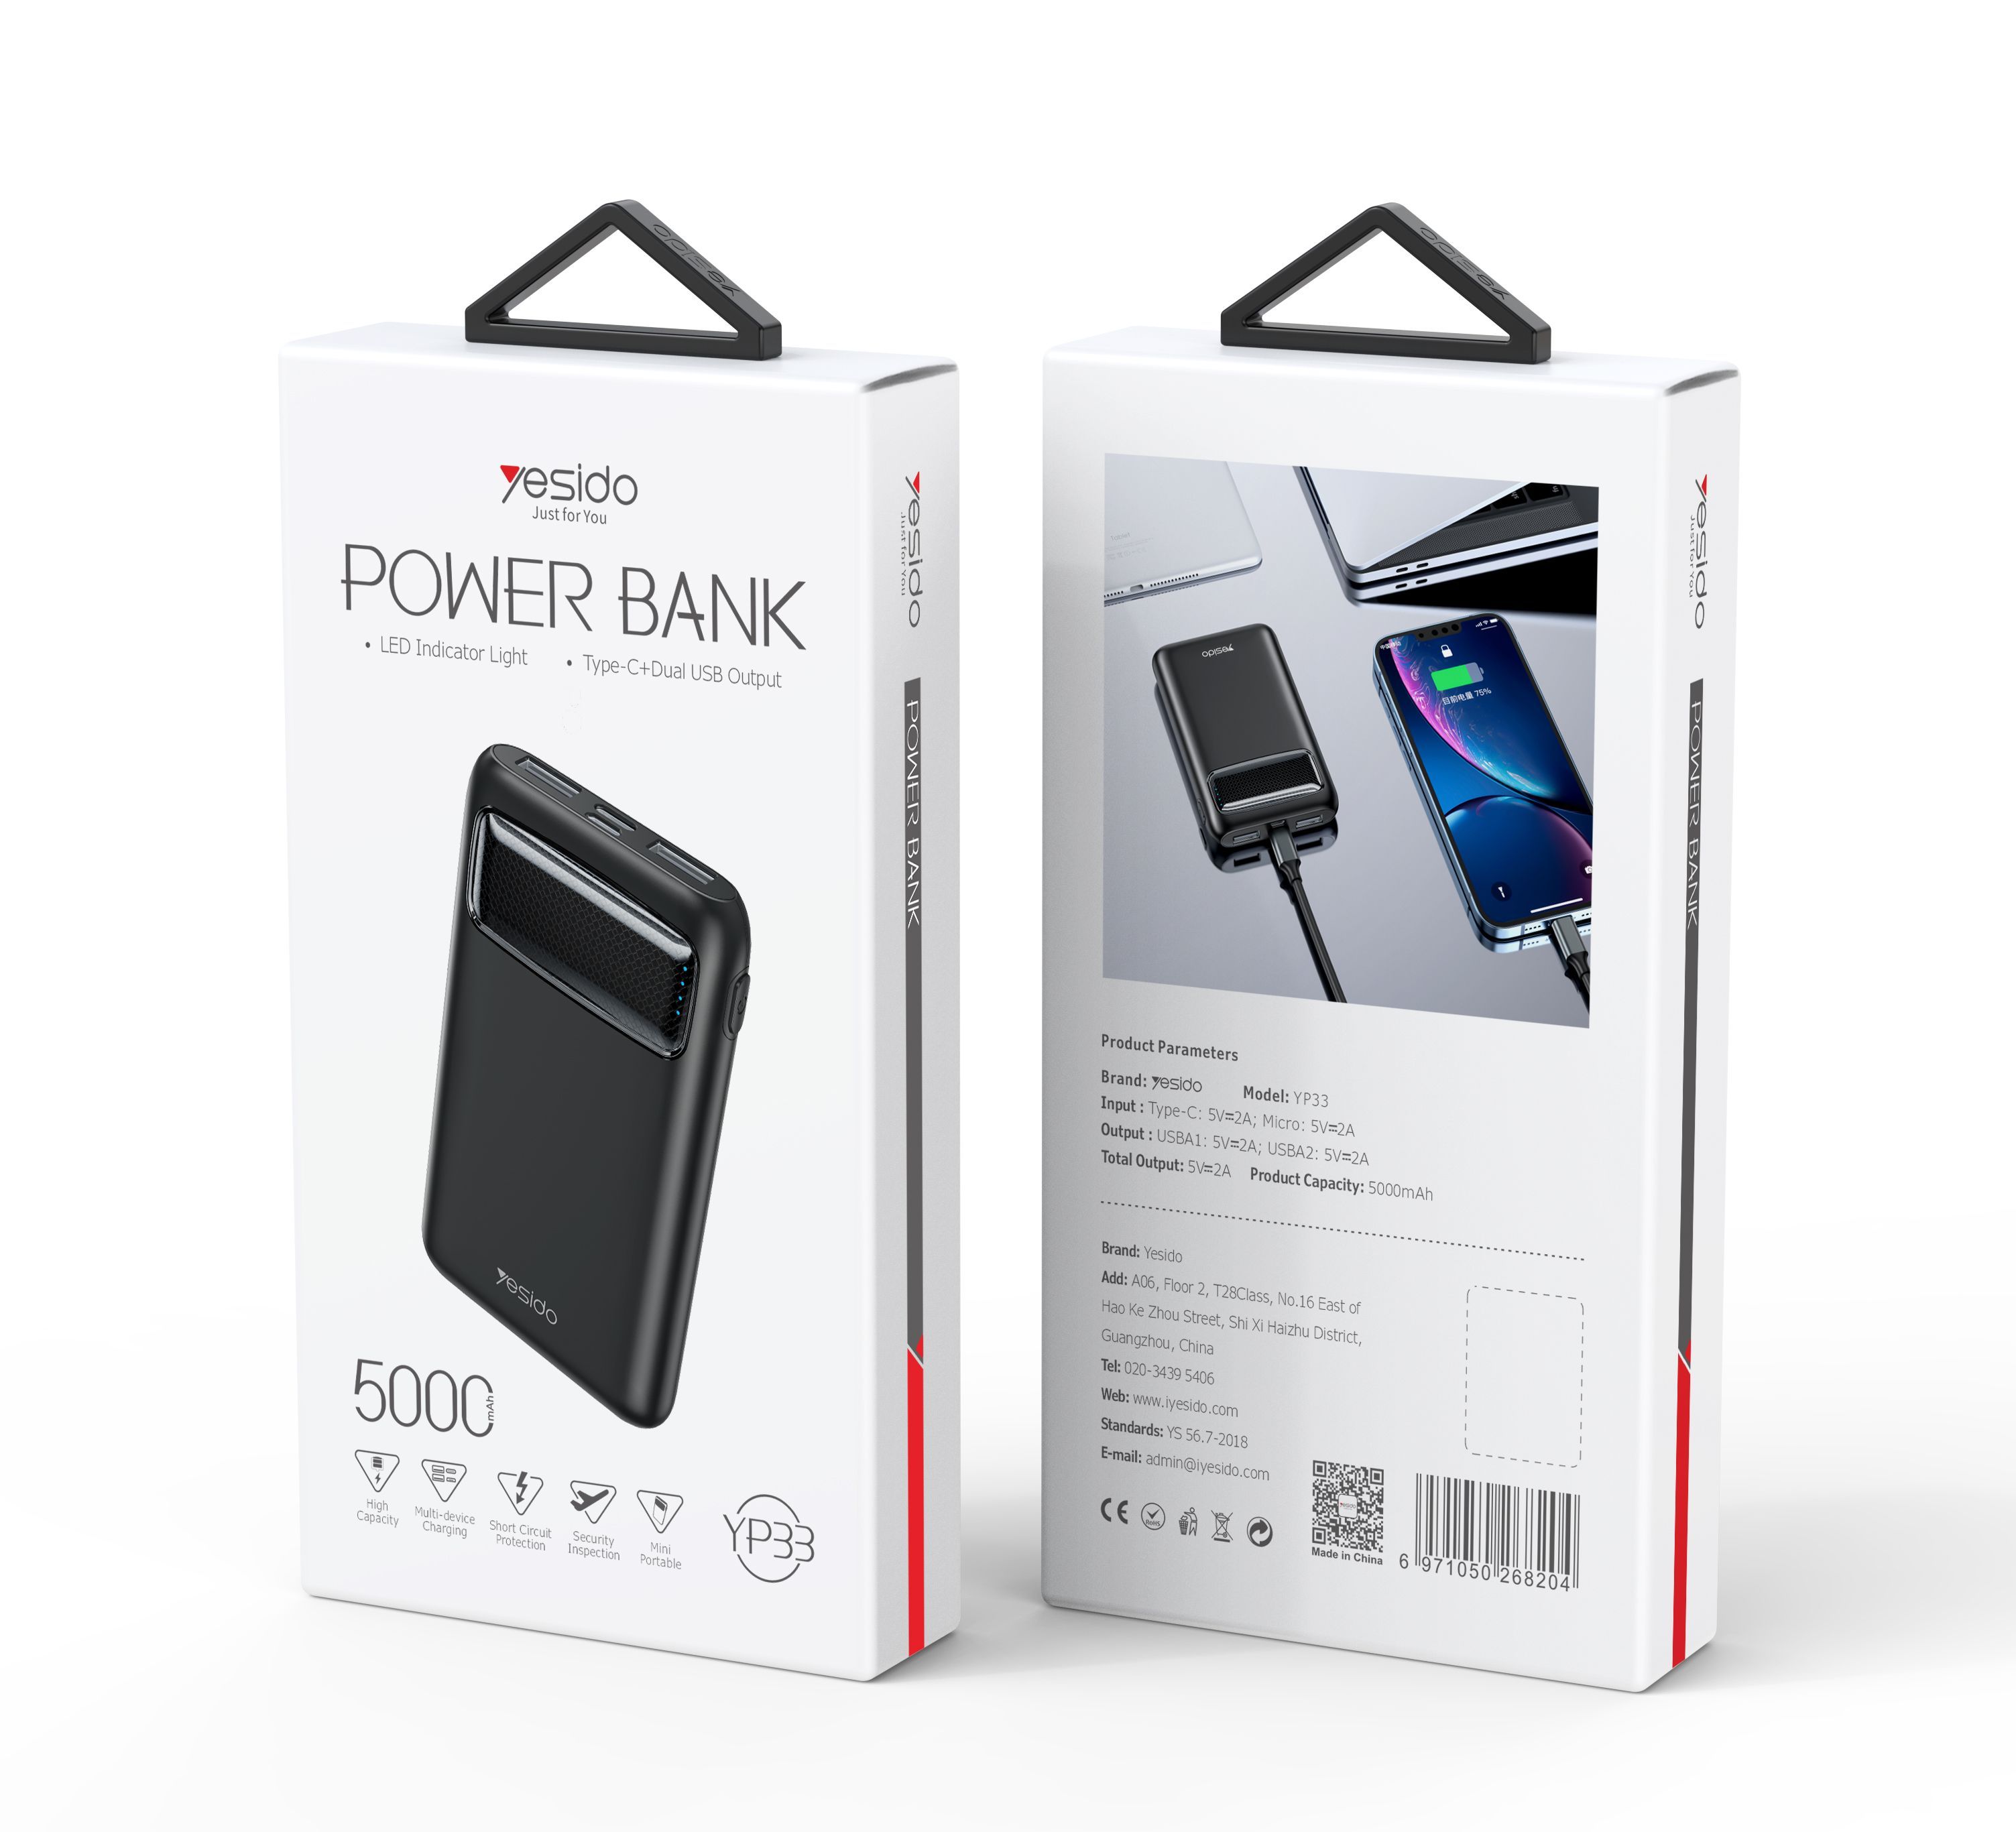 Yesido YP33 5000mAh Power Bank Packaging